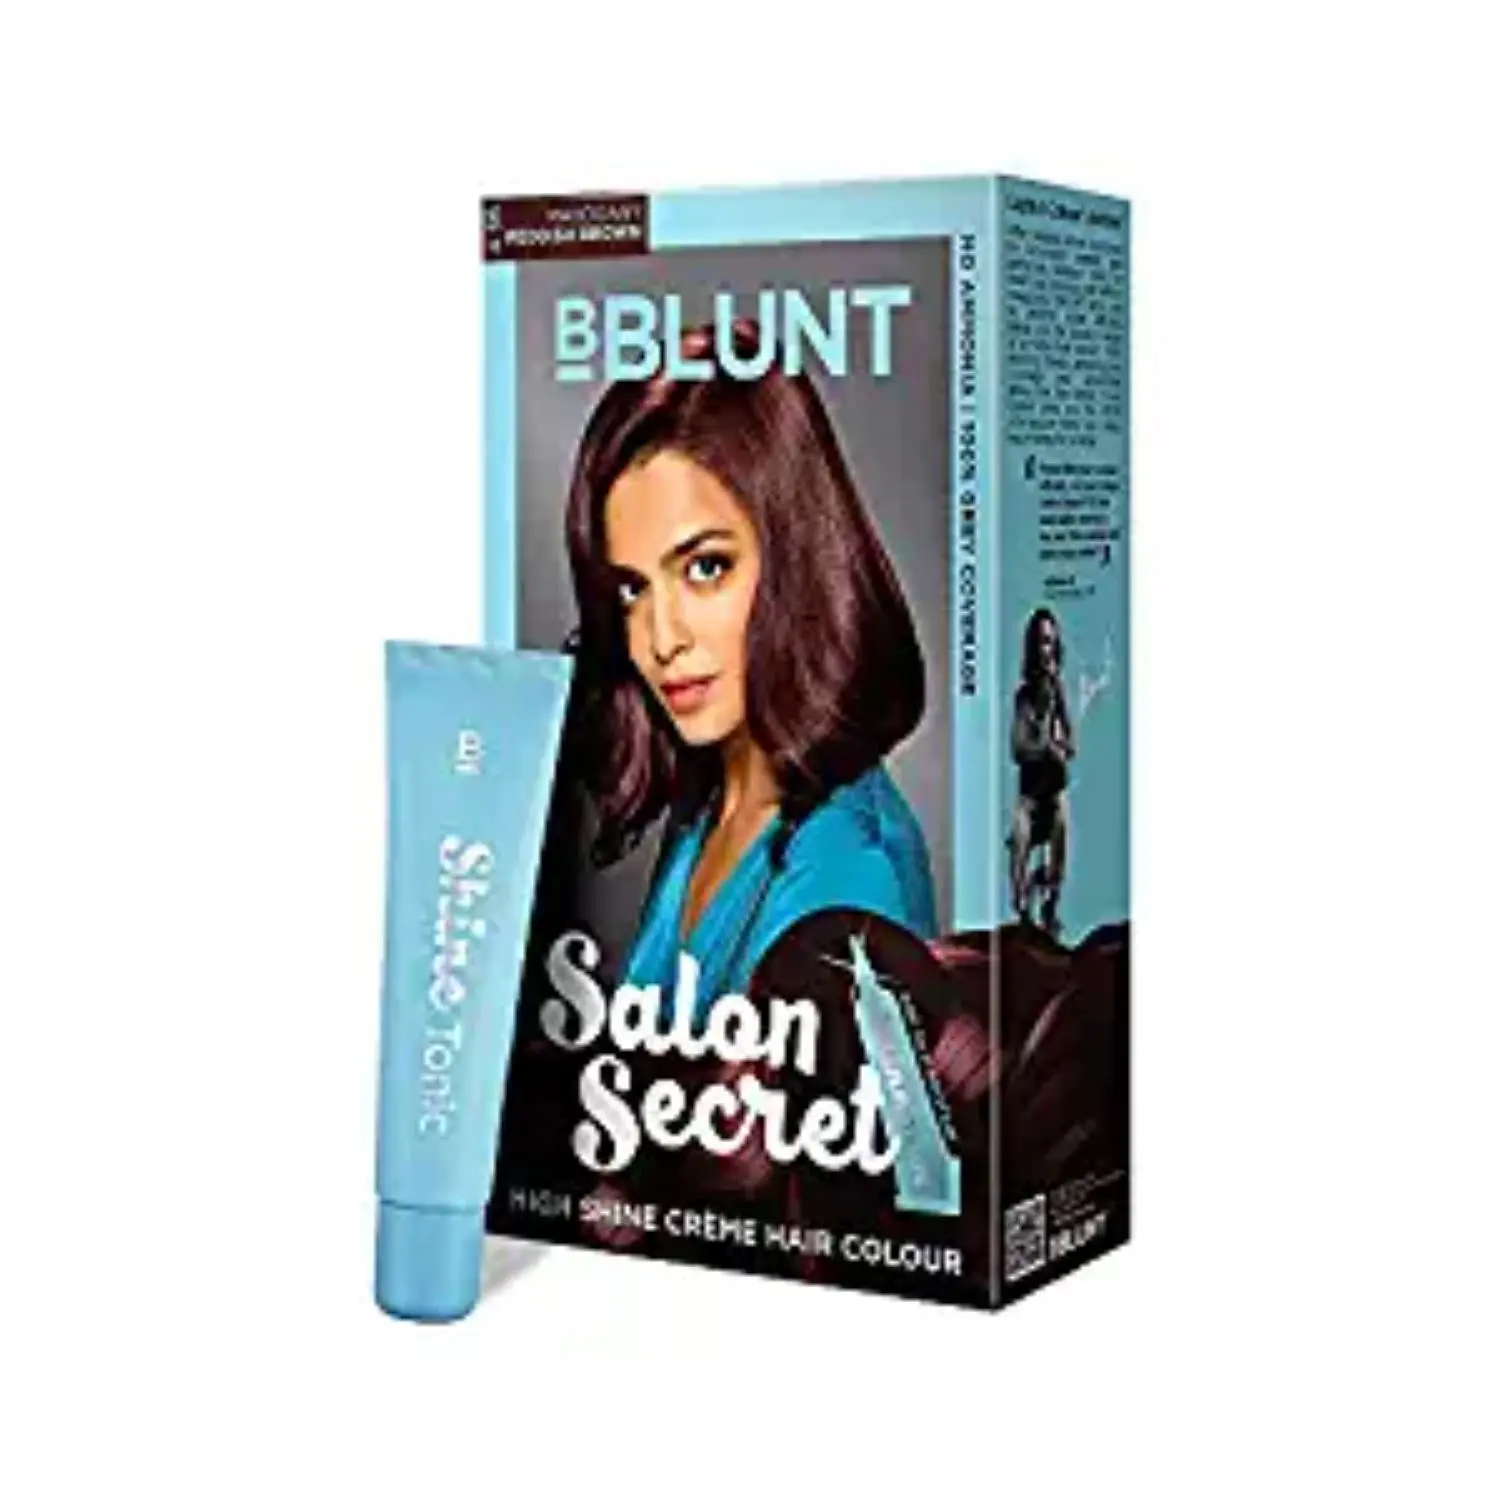 BBLUNT Salon Secret High Creme Hair Colour Mahogany Reddish Brown